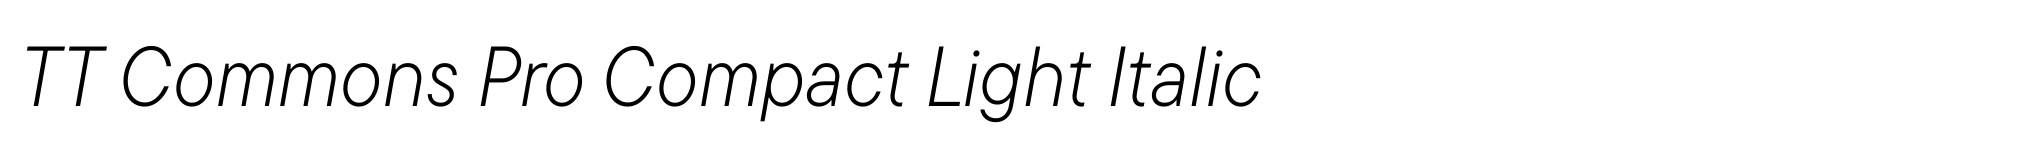 TT Commons Pro Compact Light Italic image